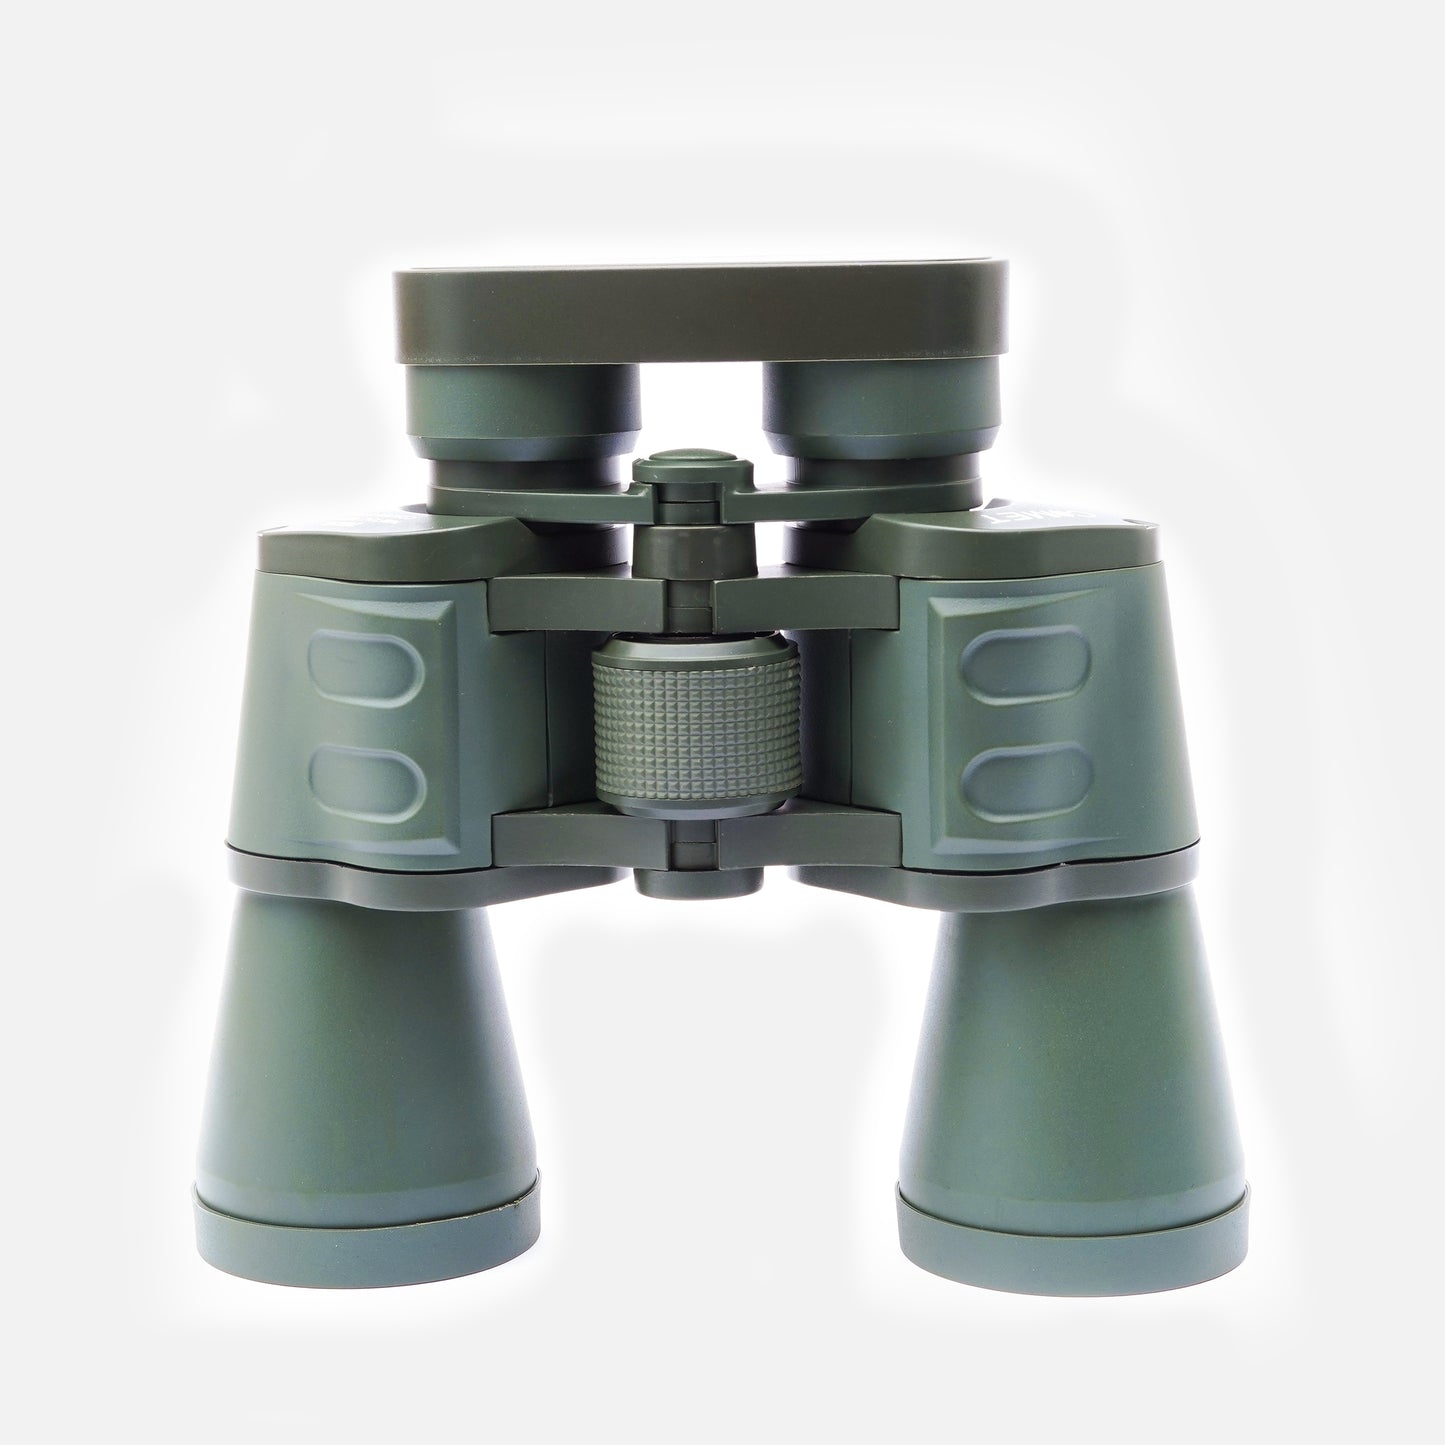 Telal COMET Binocular 20x50